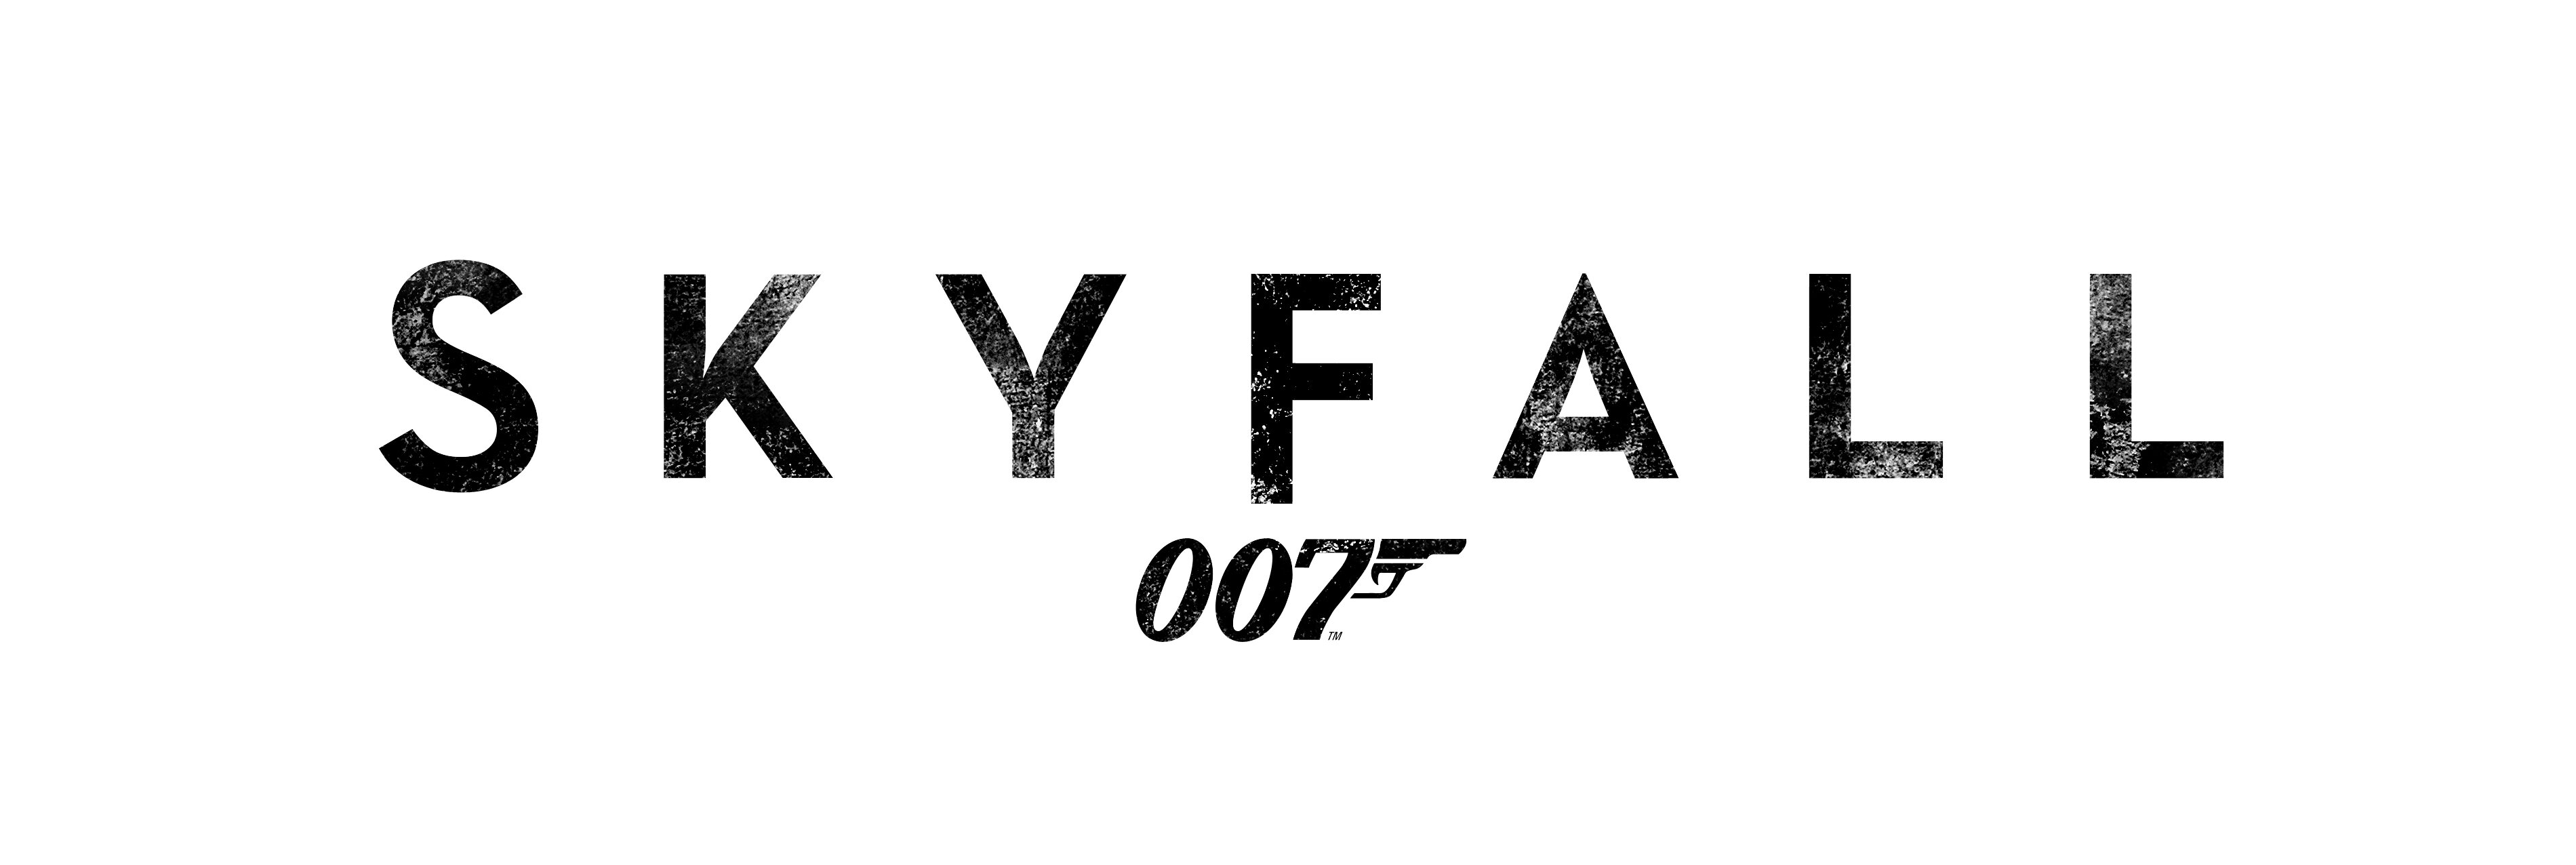 Bond 23 Facebook page - press conference updates